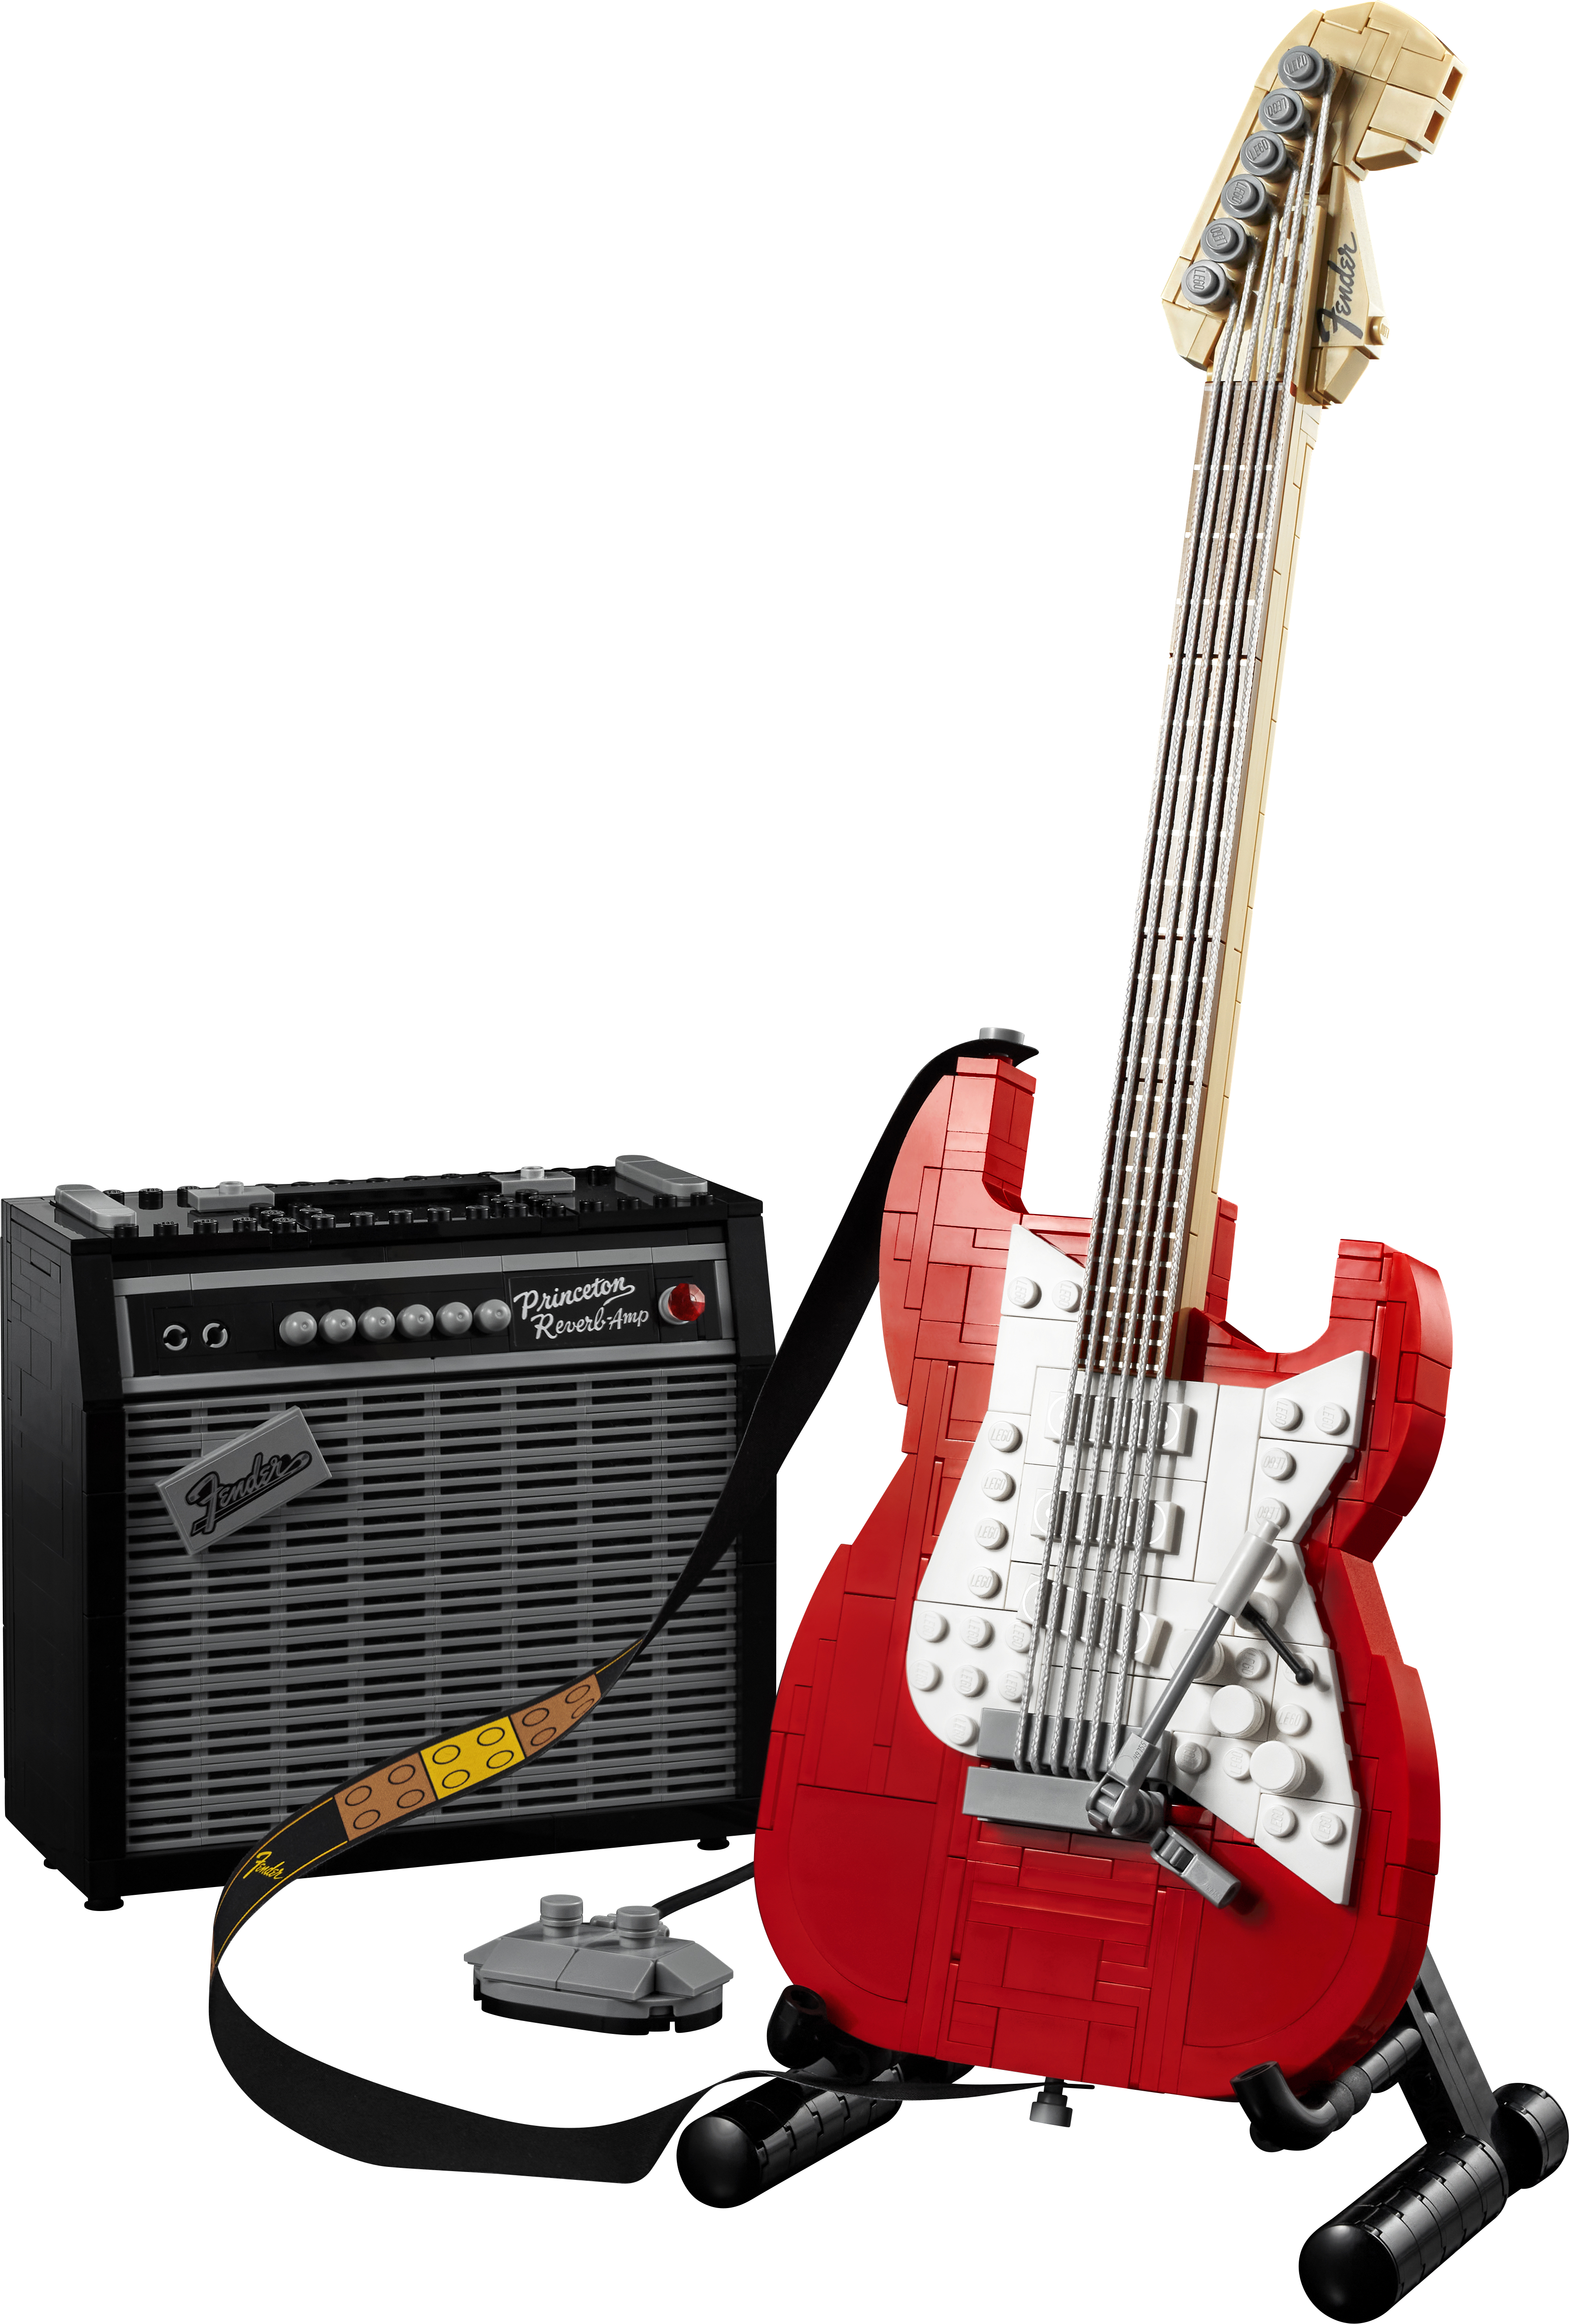 Lego Fender Stratocaster 21329 Light Kit(With Sound) – Lightailing